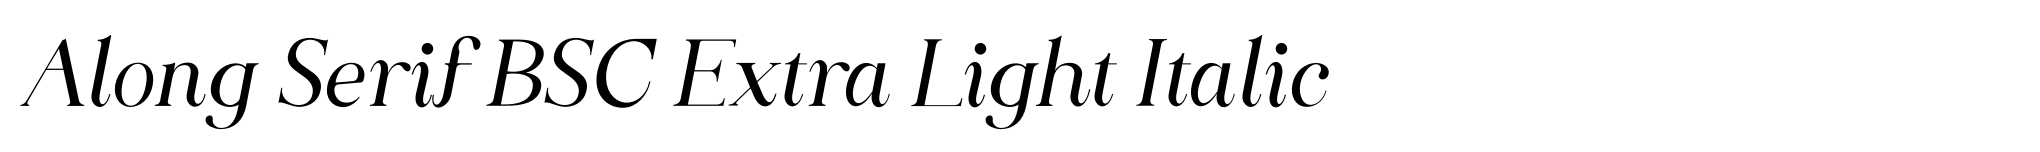 Along Serif BSC Extra Light Italic image